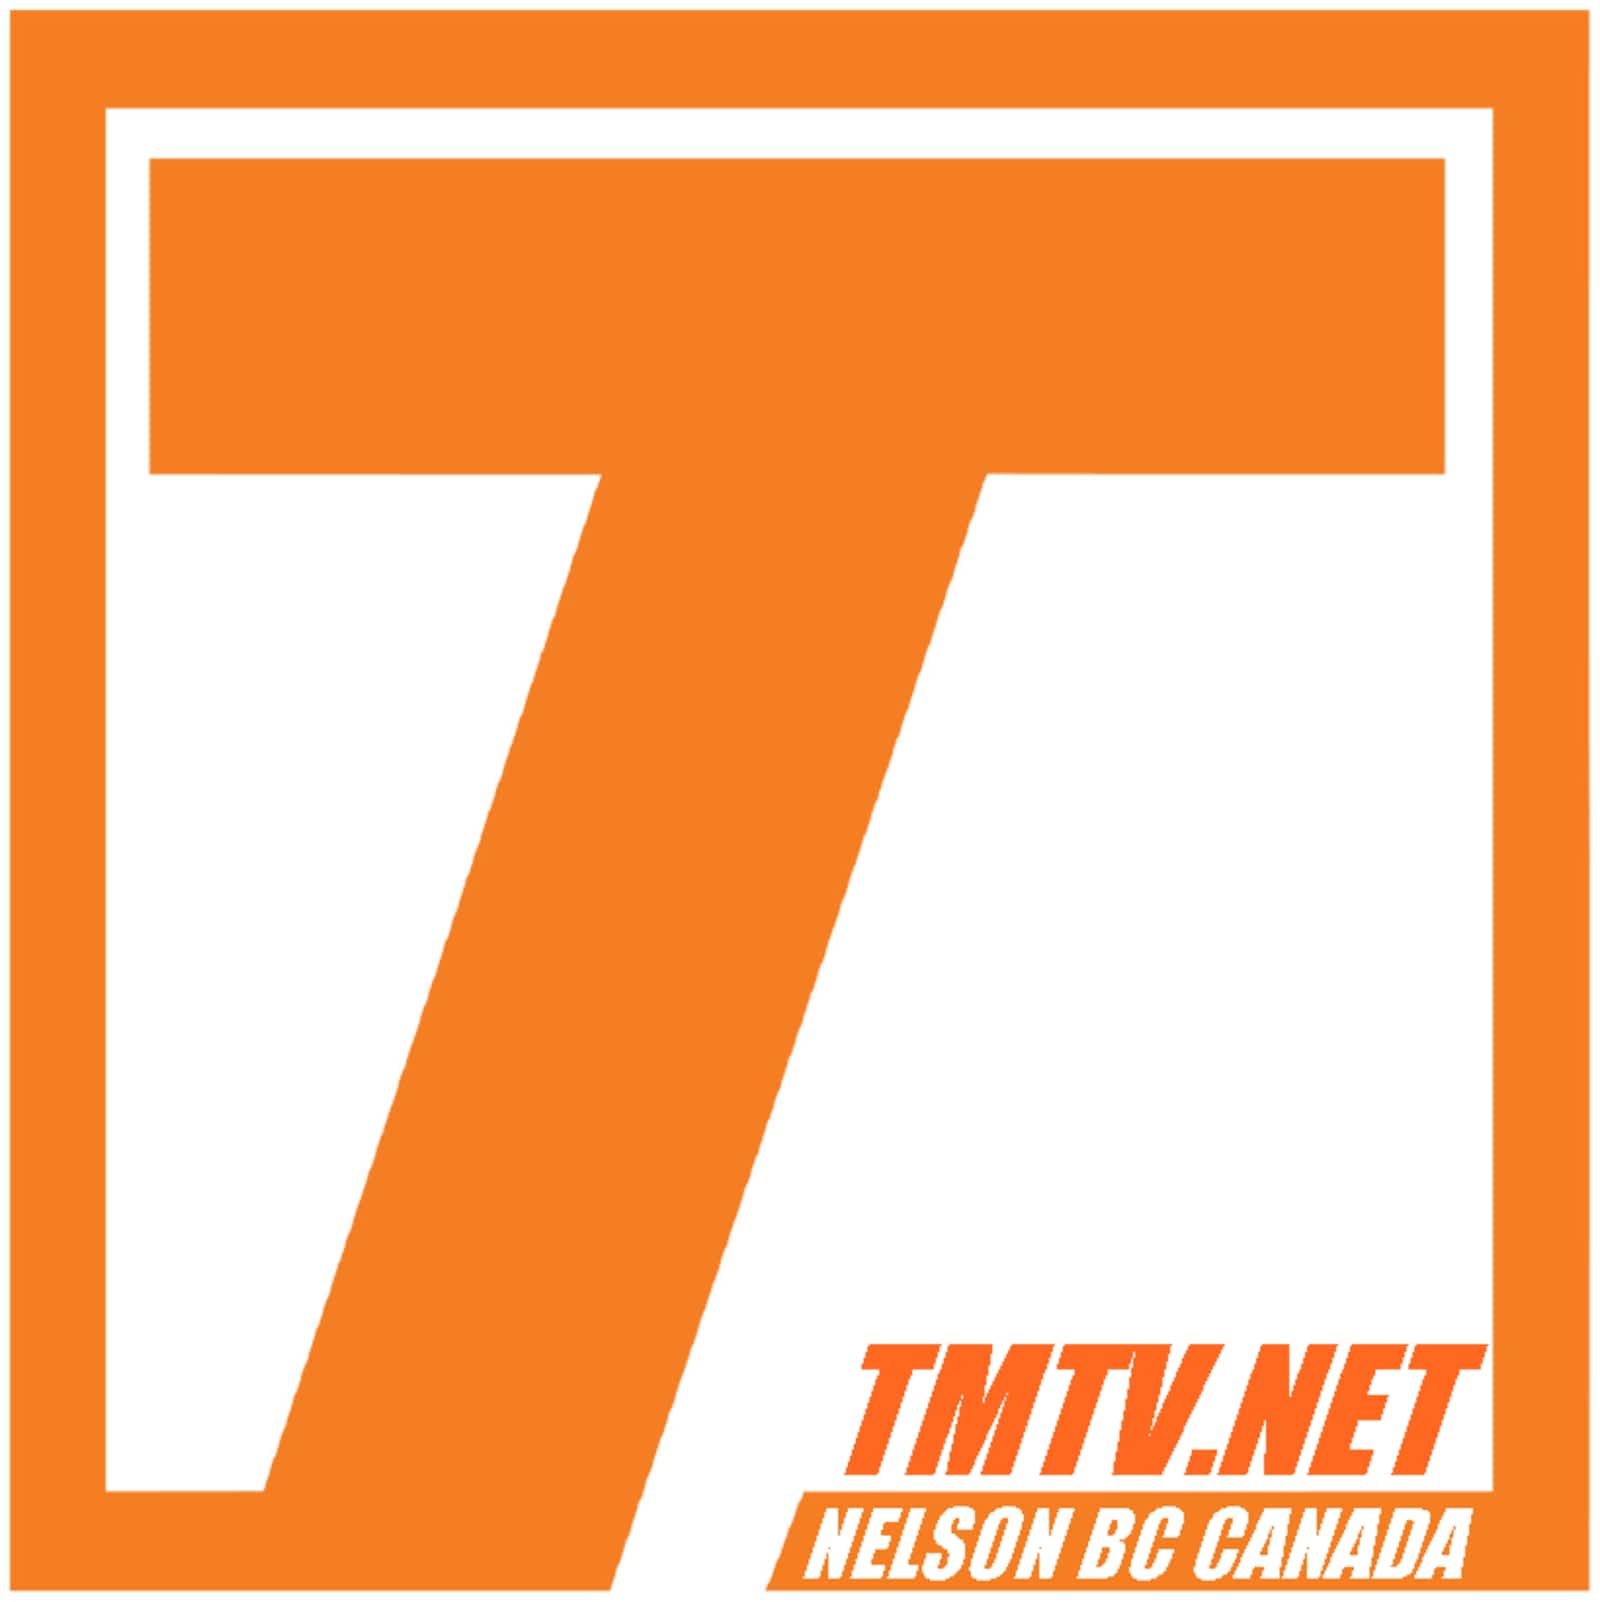 TMTV.Net Film & Video Services - 5662 Longbeach Rd, Nelson, BC